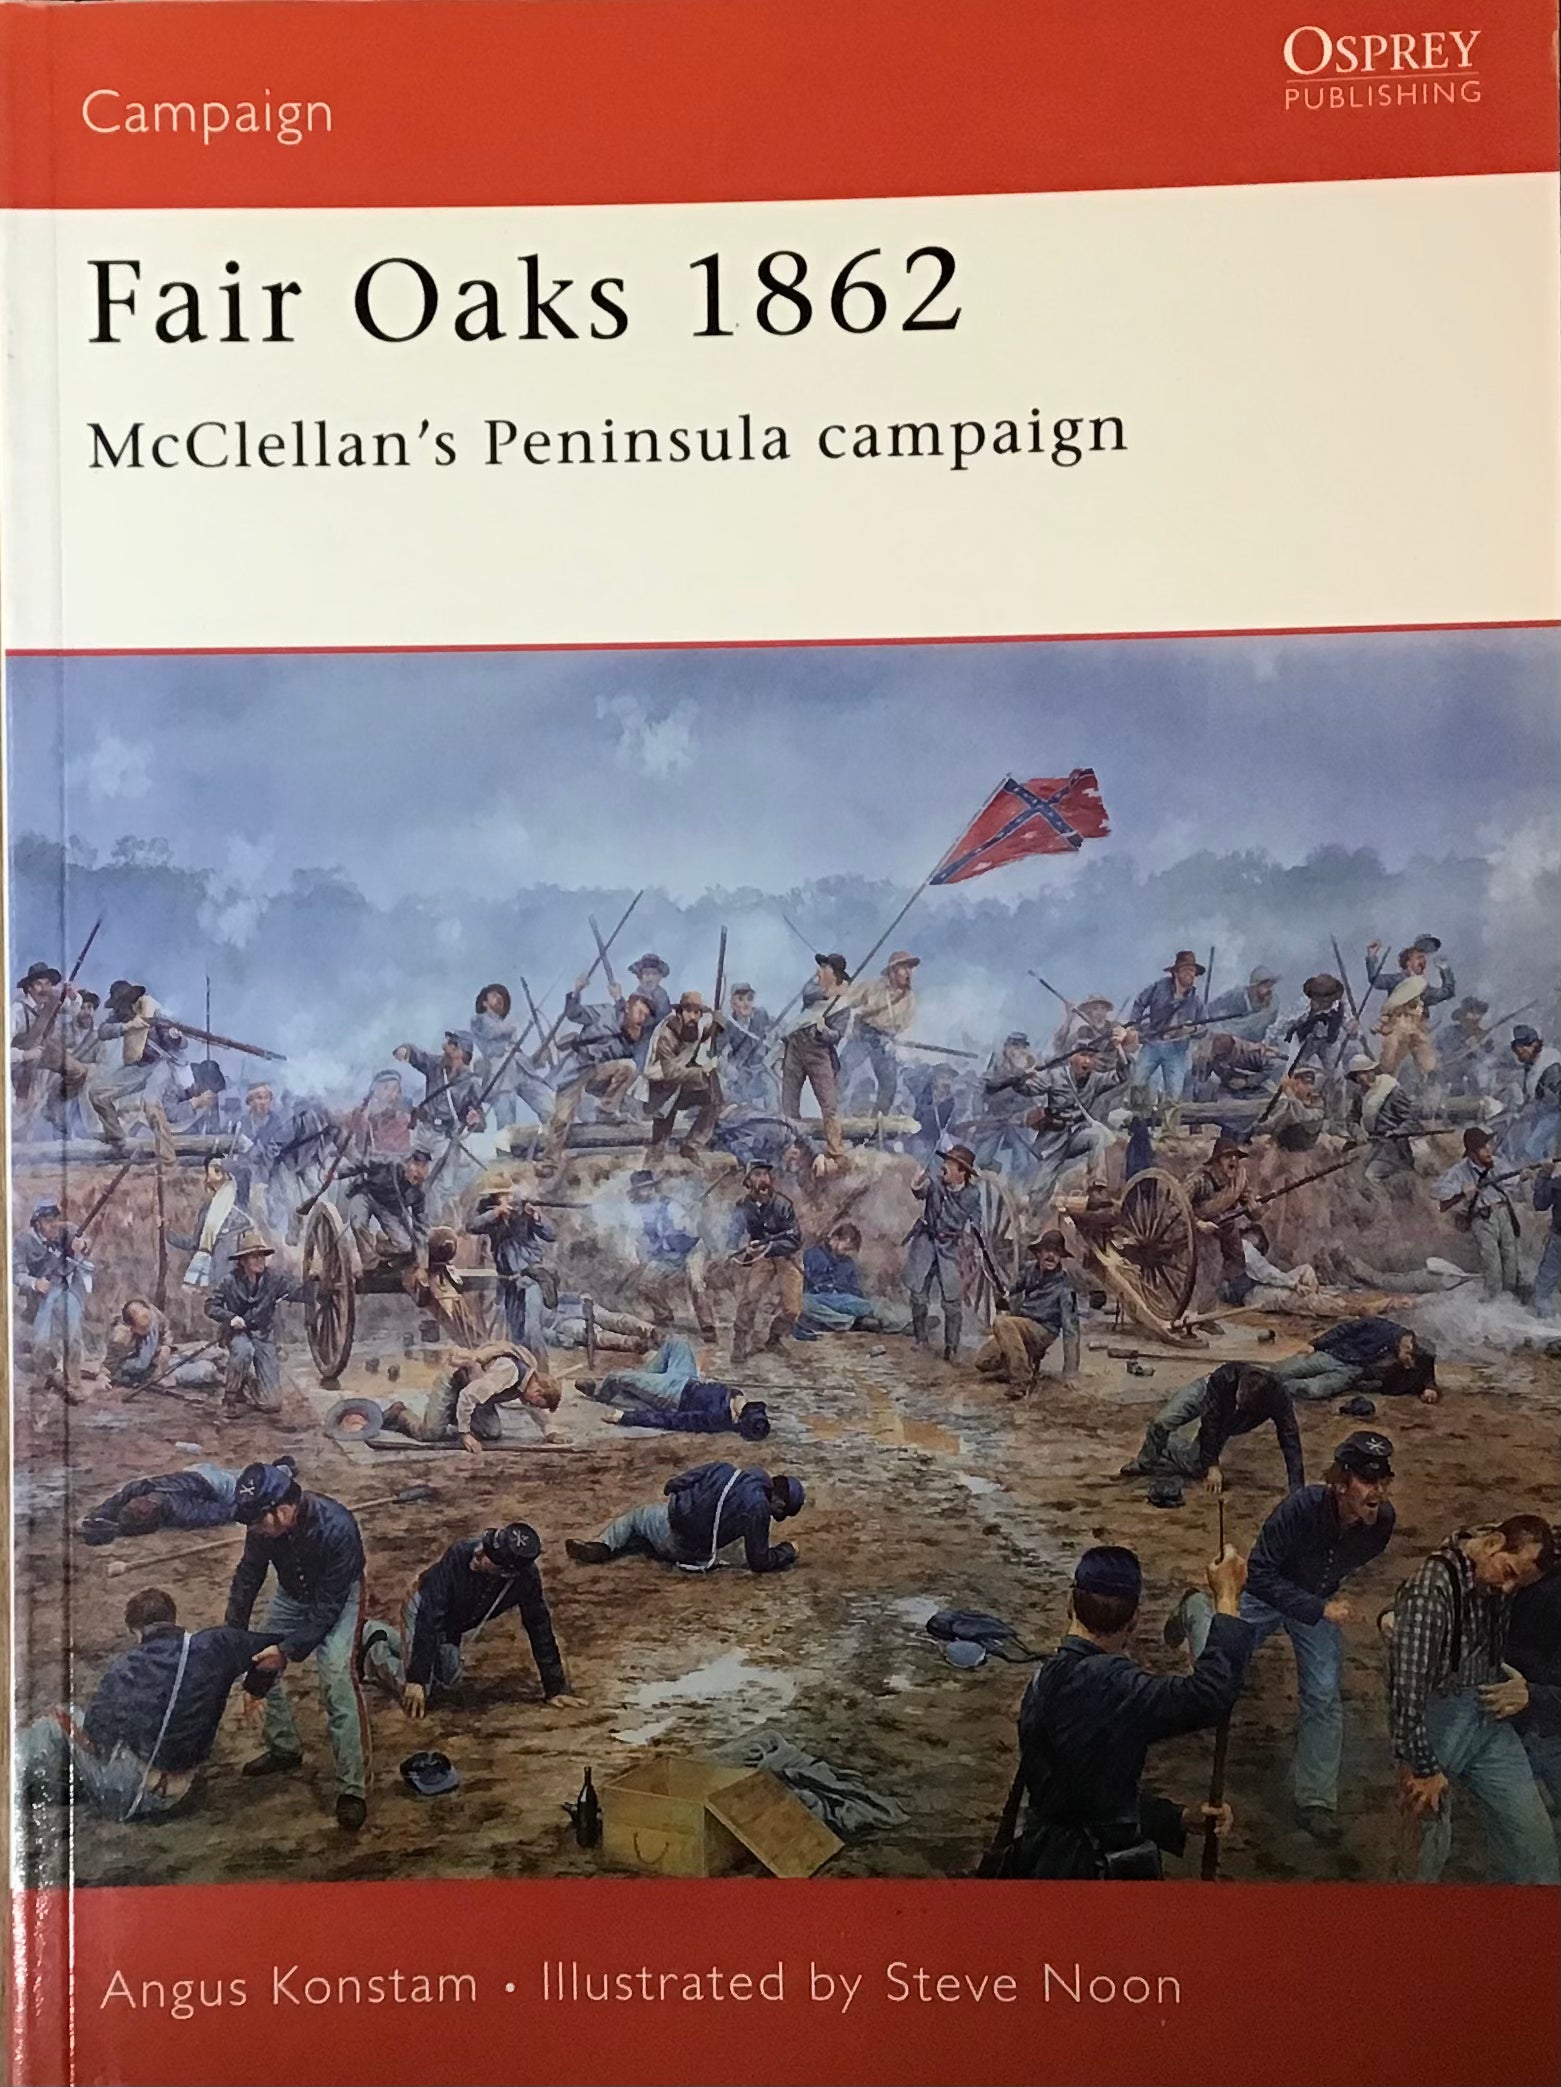 Fair Oaks 1862: McClellan's Peninsula Campaign by Angus Konstam and Steve Noon - Chester Model Centre